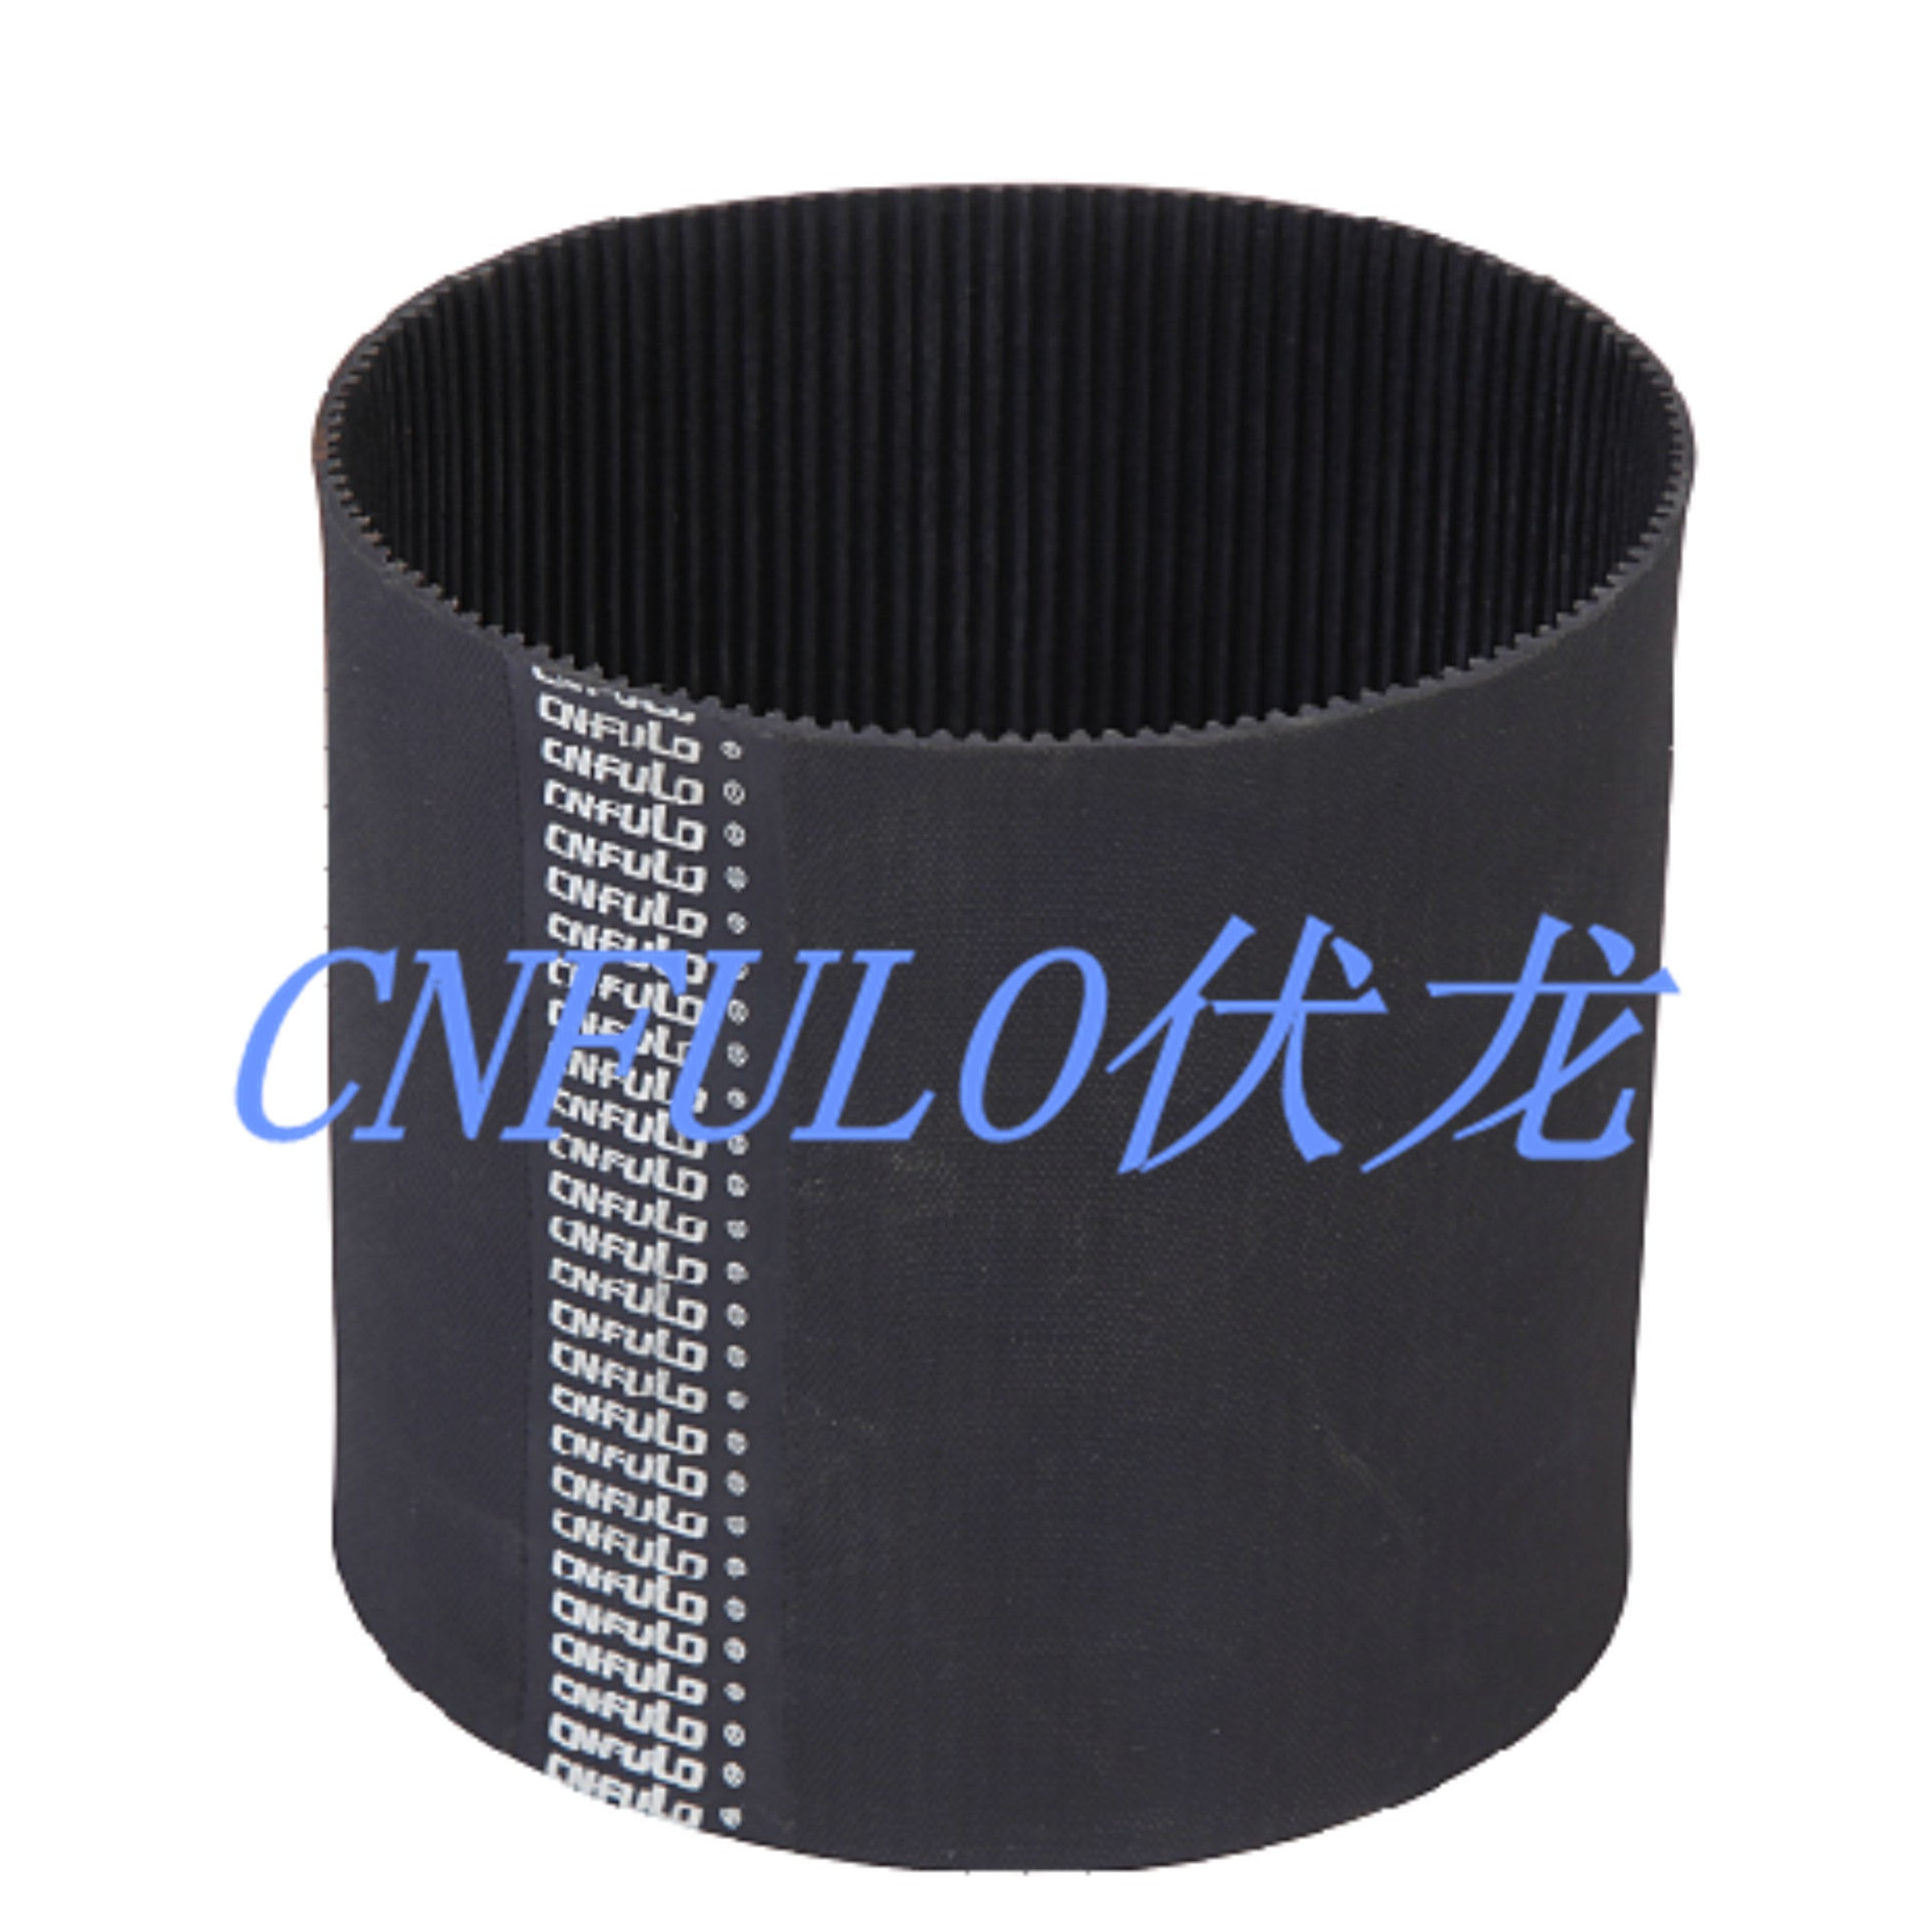 Industrial Rubber Timing Belt, Power Transmission/Texitle/Printer Belt, 320h